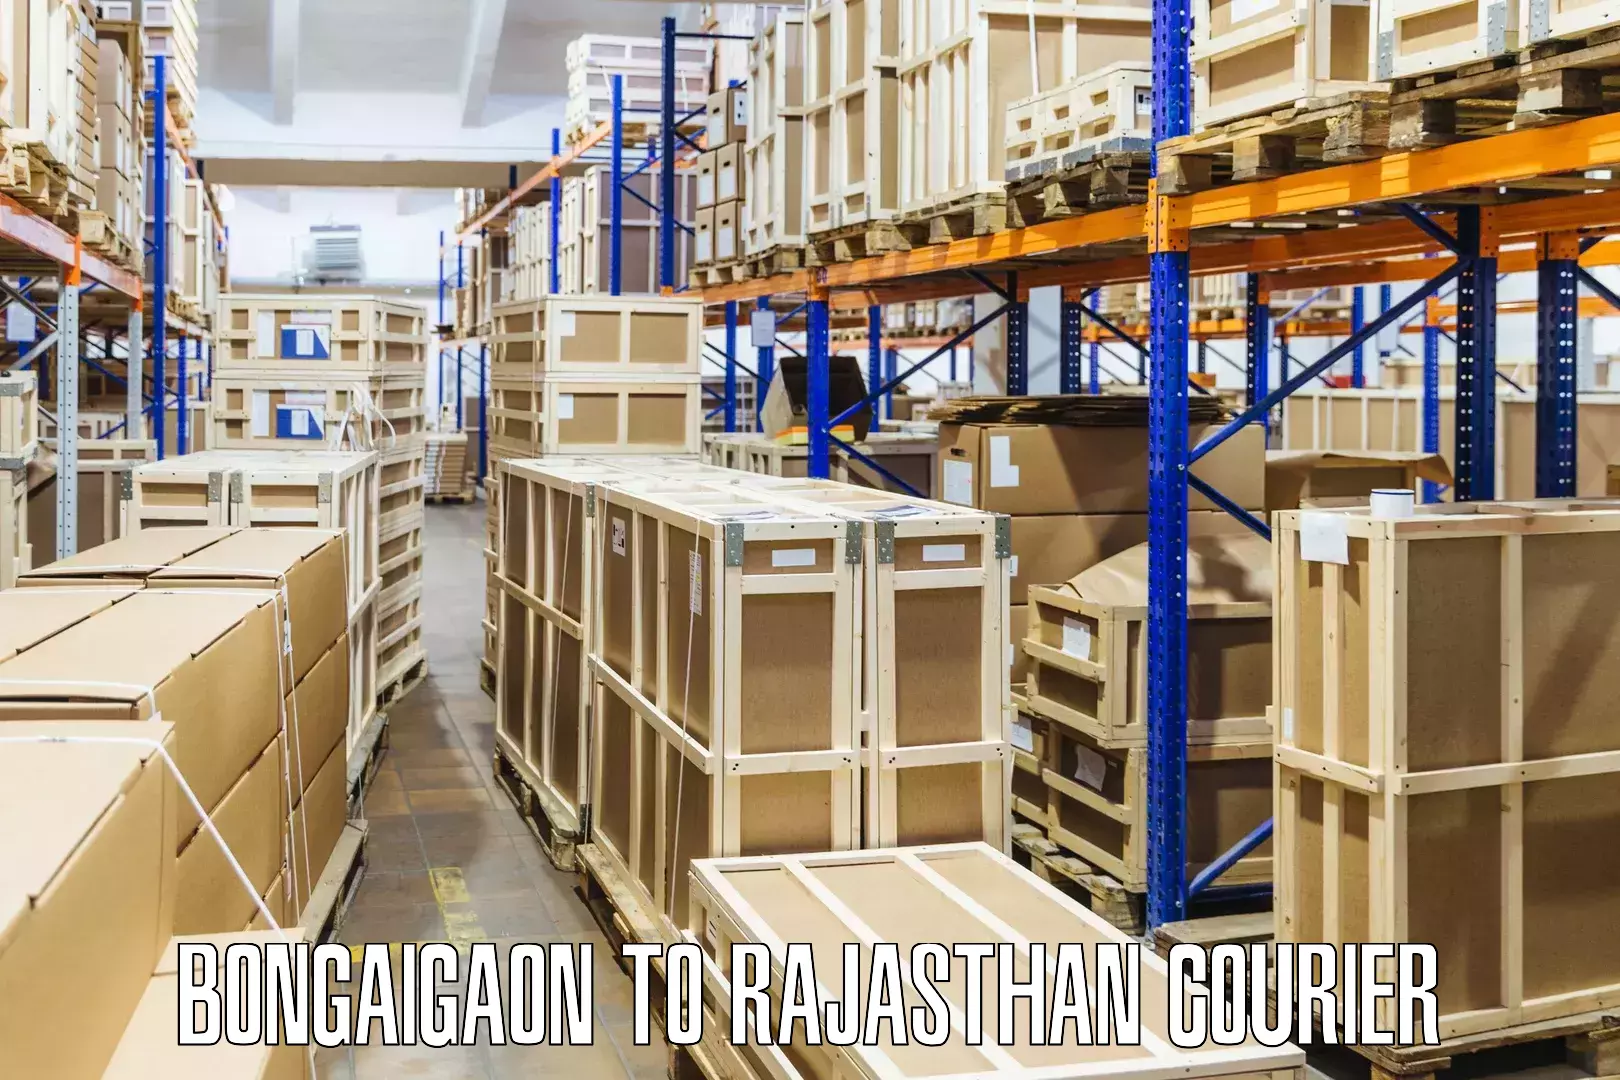 Express courier capabilities Bongaigaon to Bayana